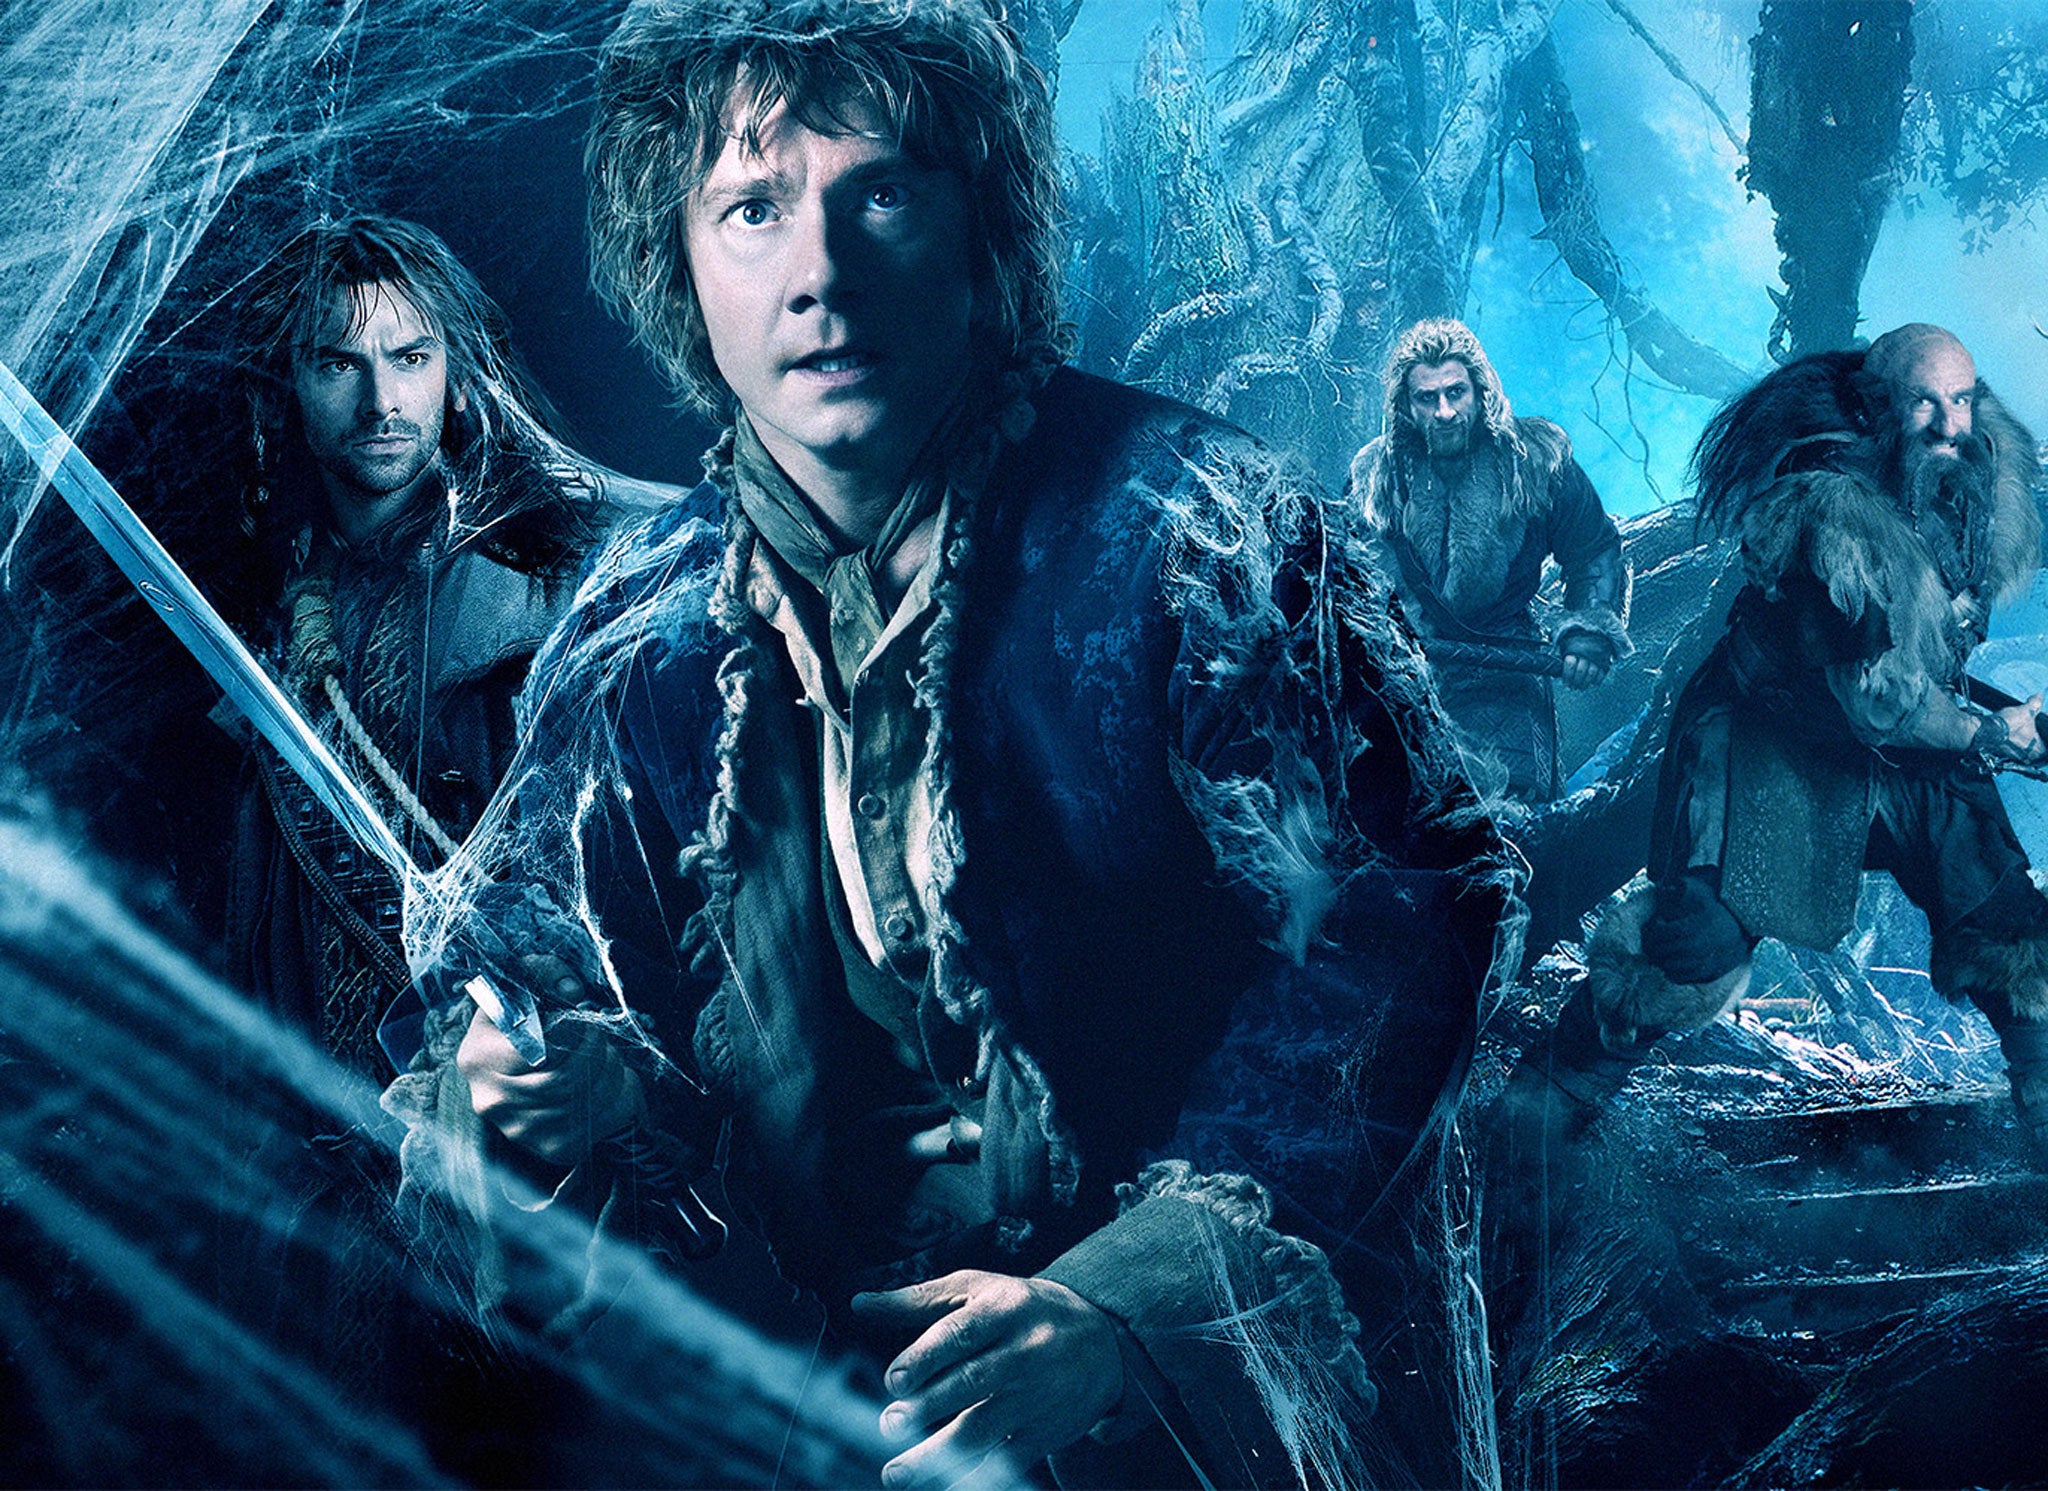 Martin Freeman stars as Bilbo Baggins in The Hobbit films